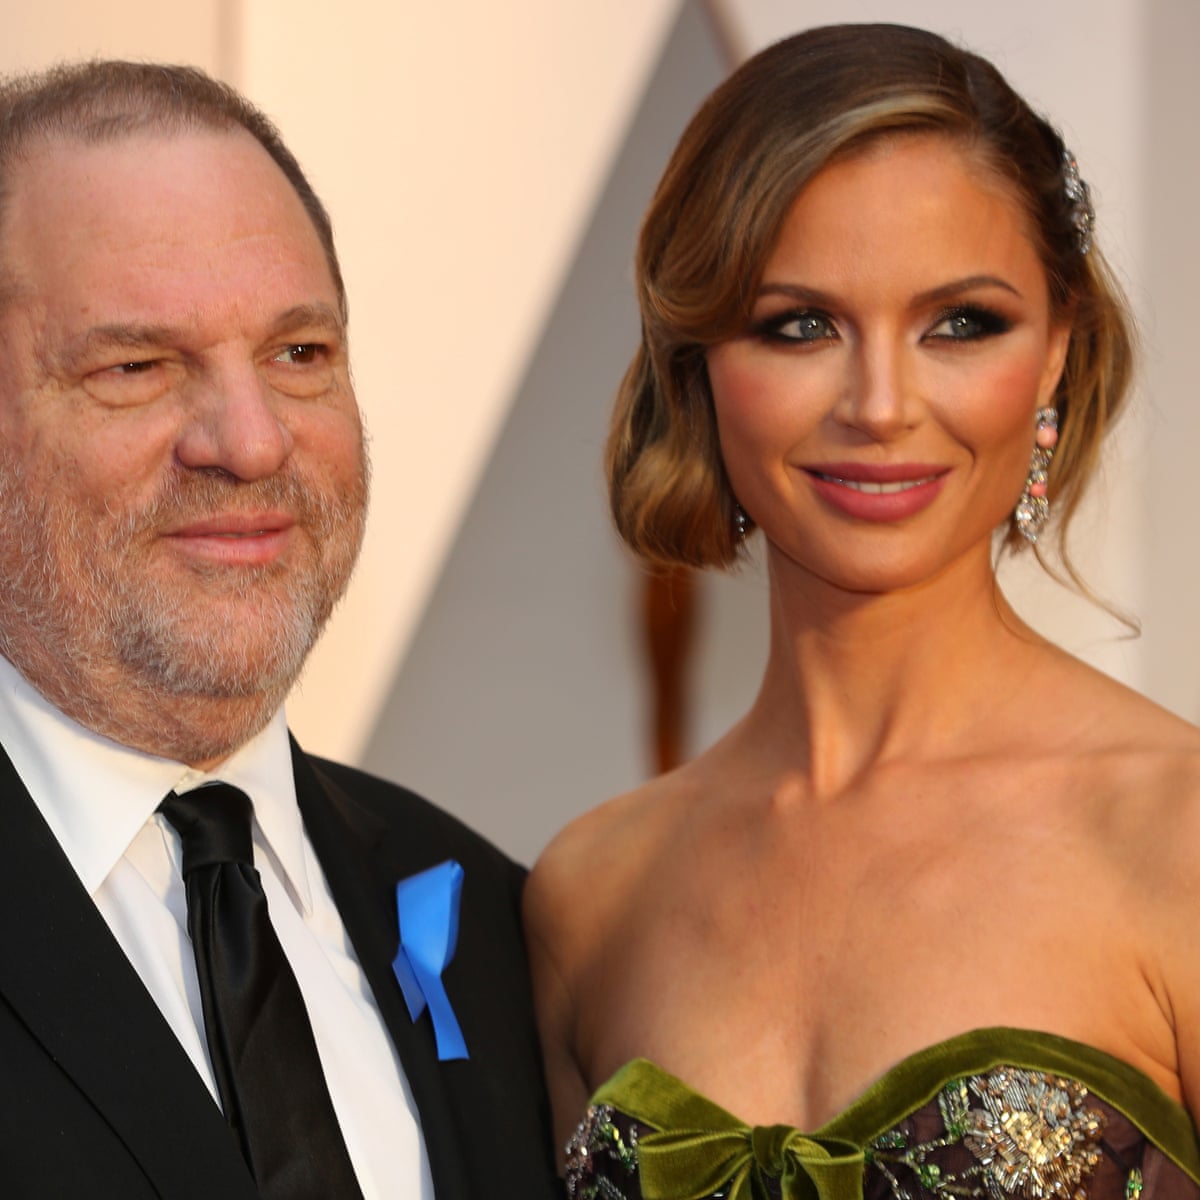 A glossy Vogue shoot won't save Georgina Chapman from the Weinstein fallout | Harvey Weinstein | The Guardian